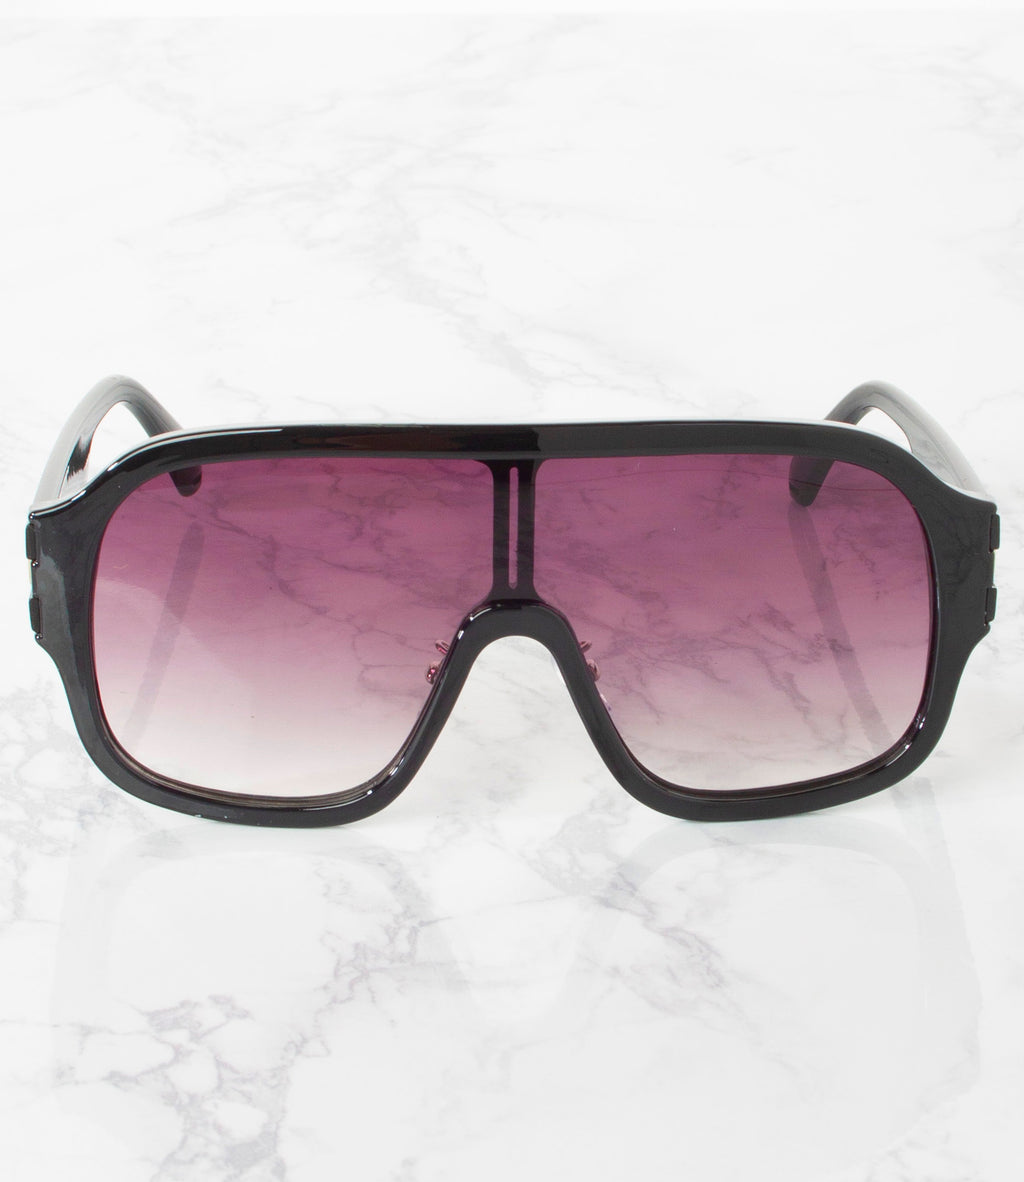 Single Color Sunglasses - P20419AP/MC-BLACK - Pack of 6 - $3.50/piece